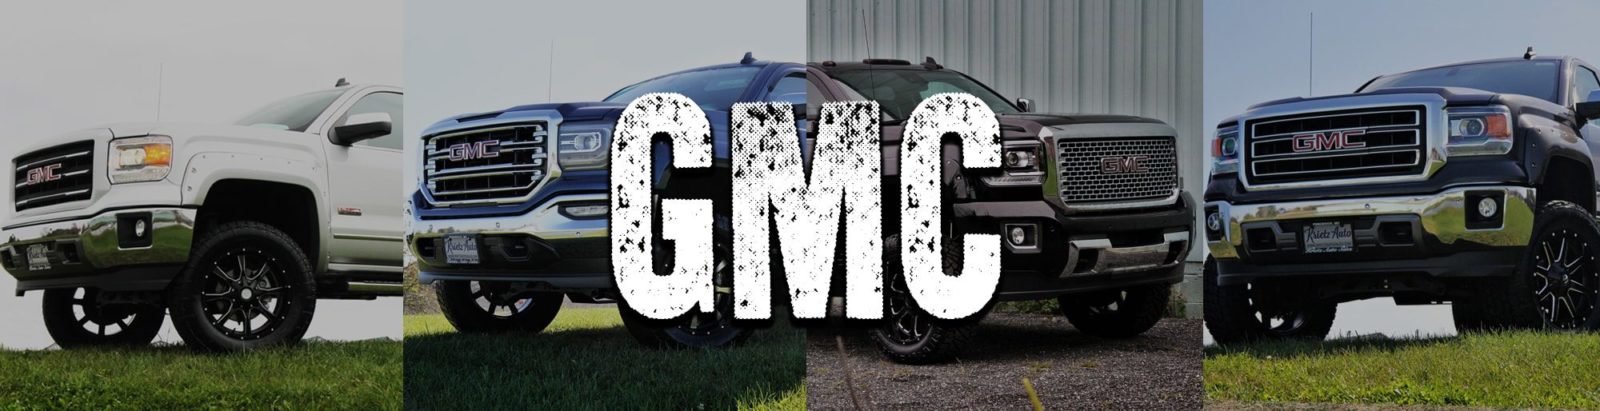 gmc trucks